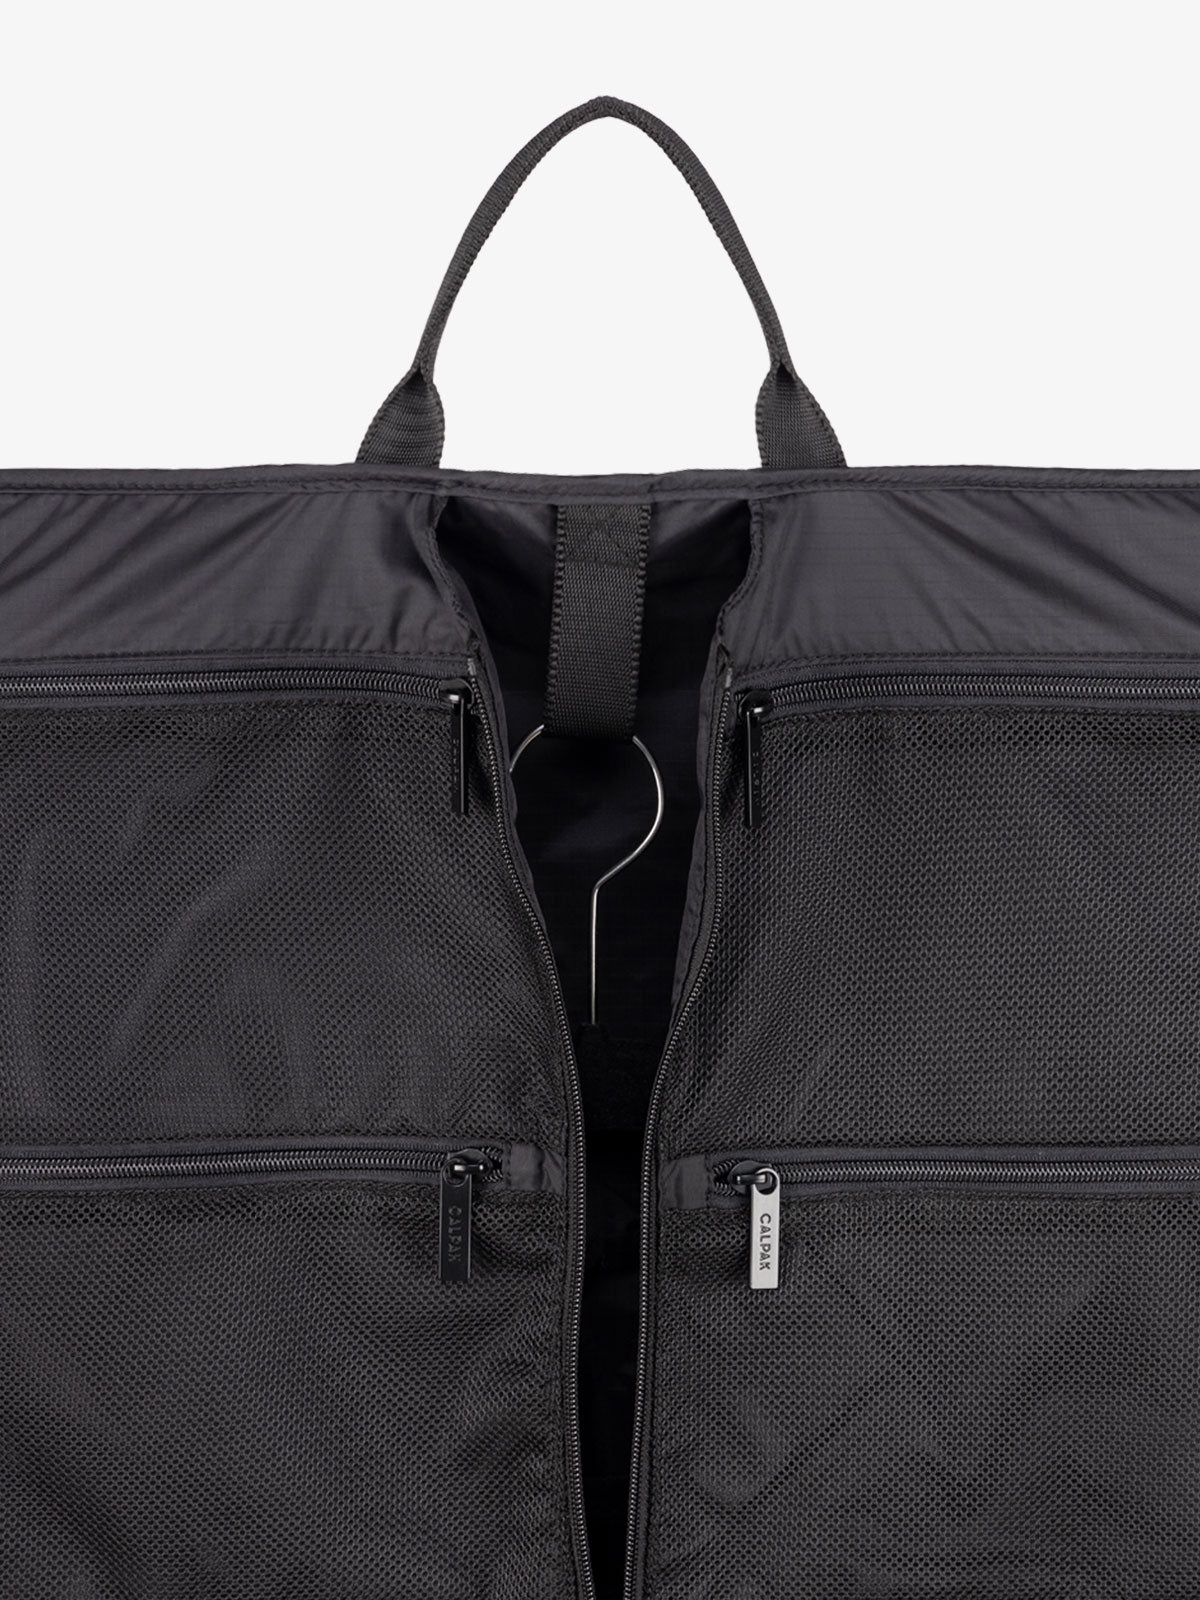 Travel Accessories Trifold Garment Bag